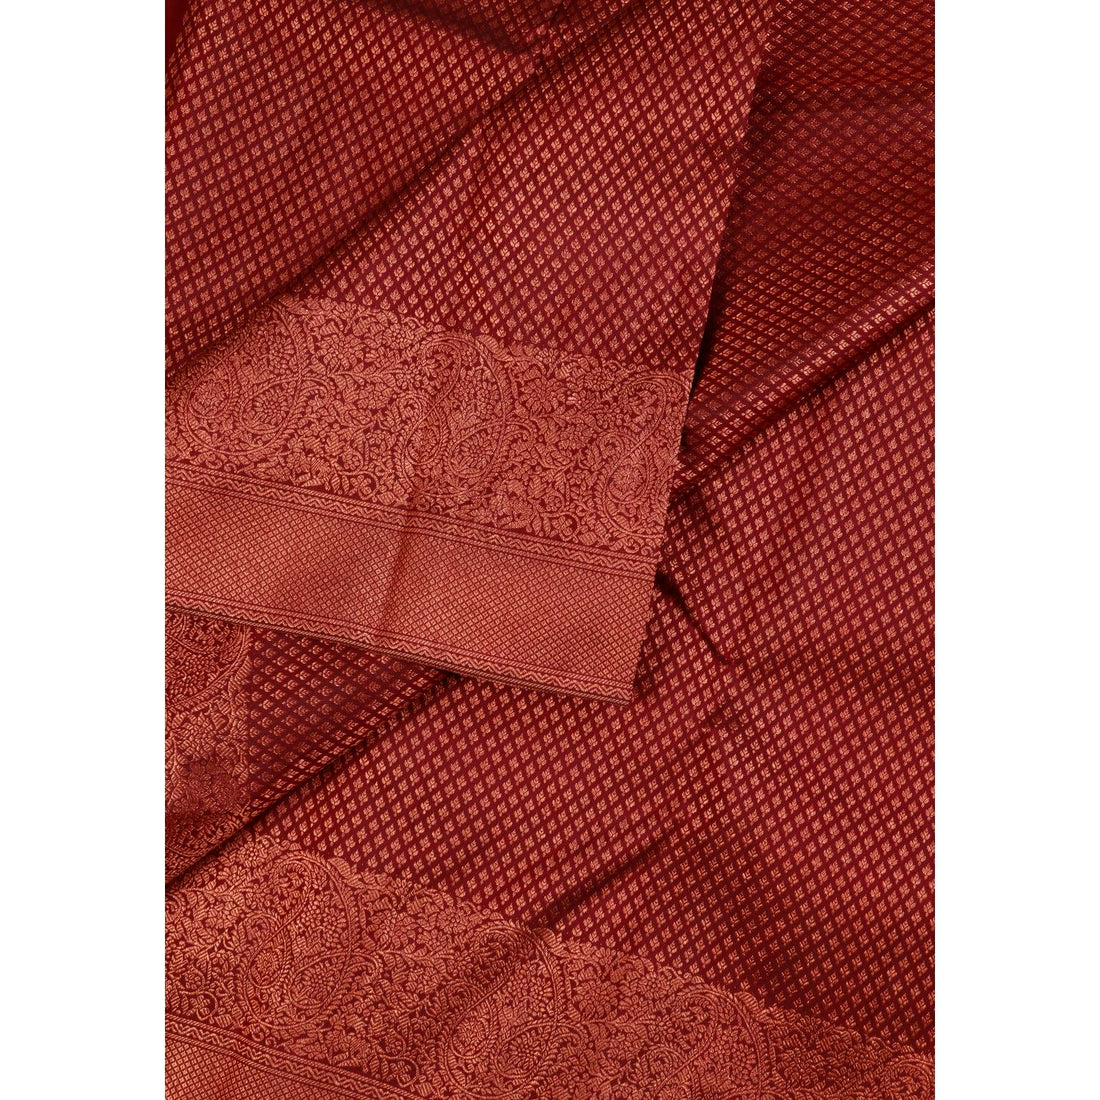 Maroon Colour Kanchipuram Pure Silk Saree With Copper Zari